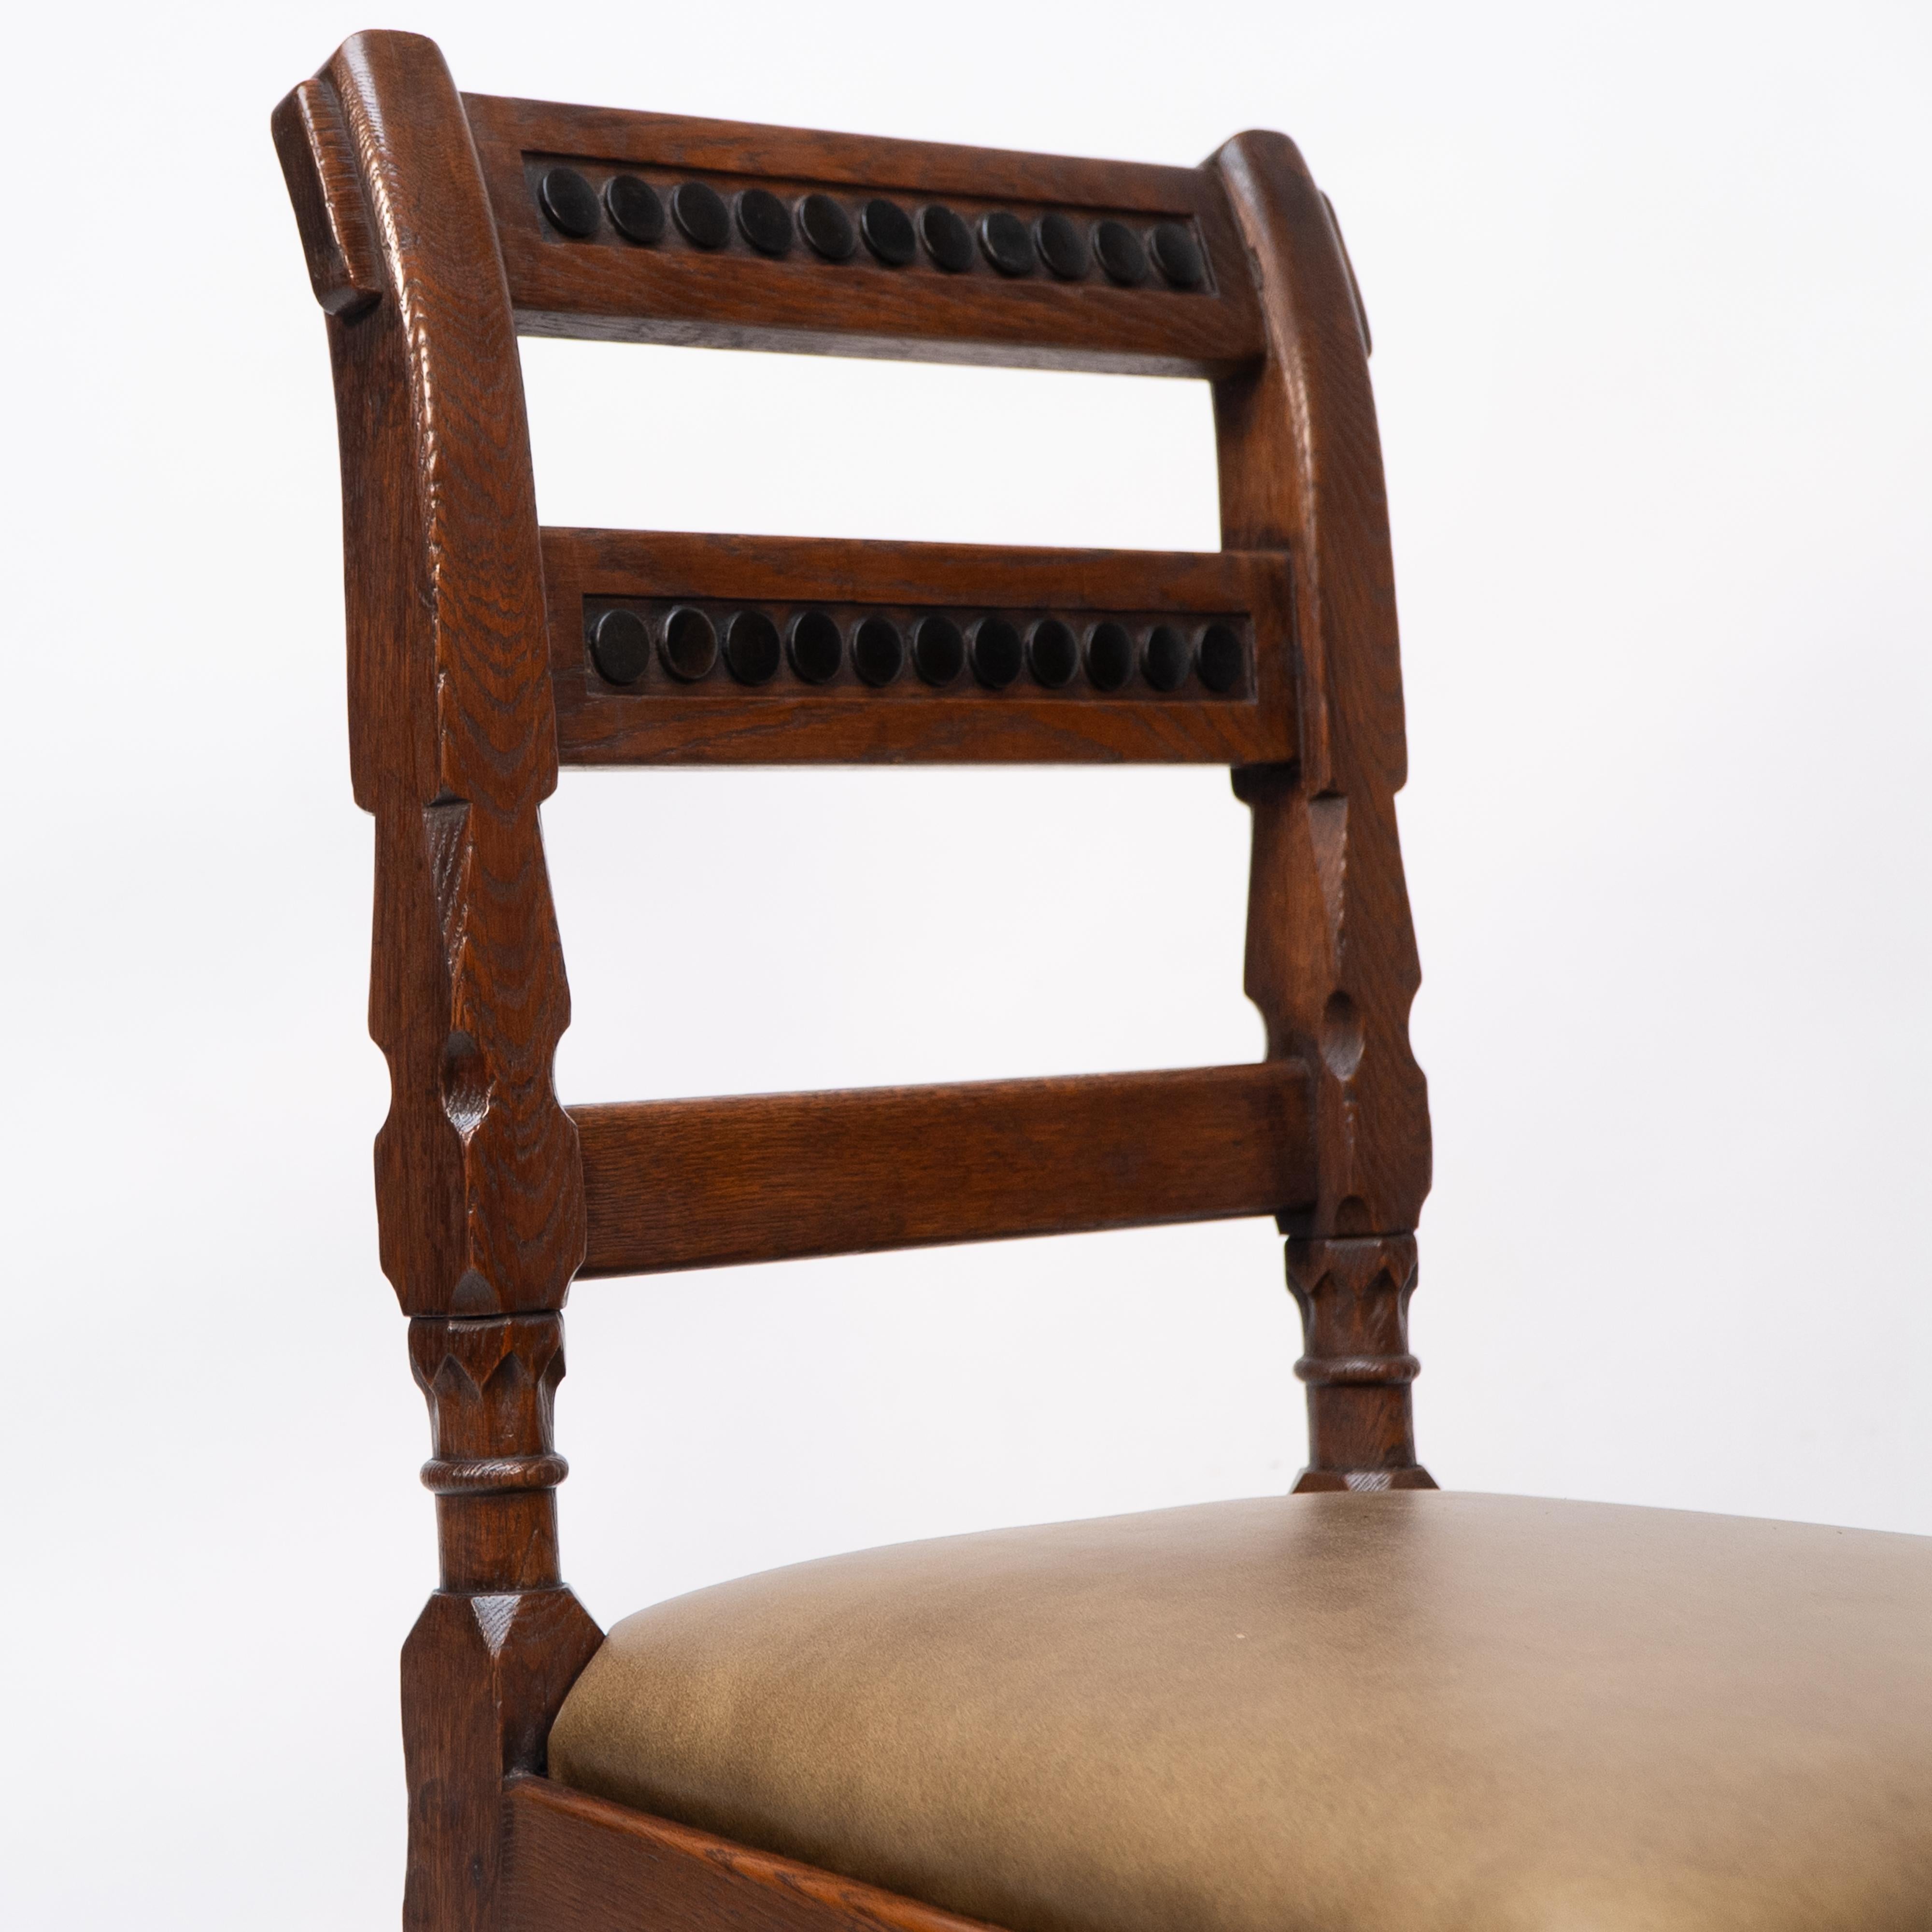 J P Seddon attri. An Aesthetic Movement oak side chair with ebonized circles For Sale 2